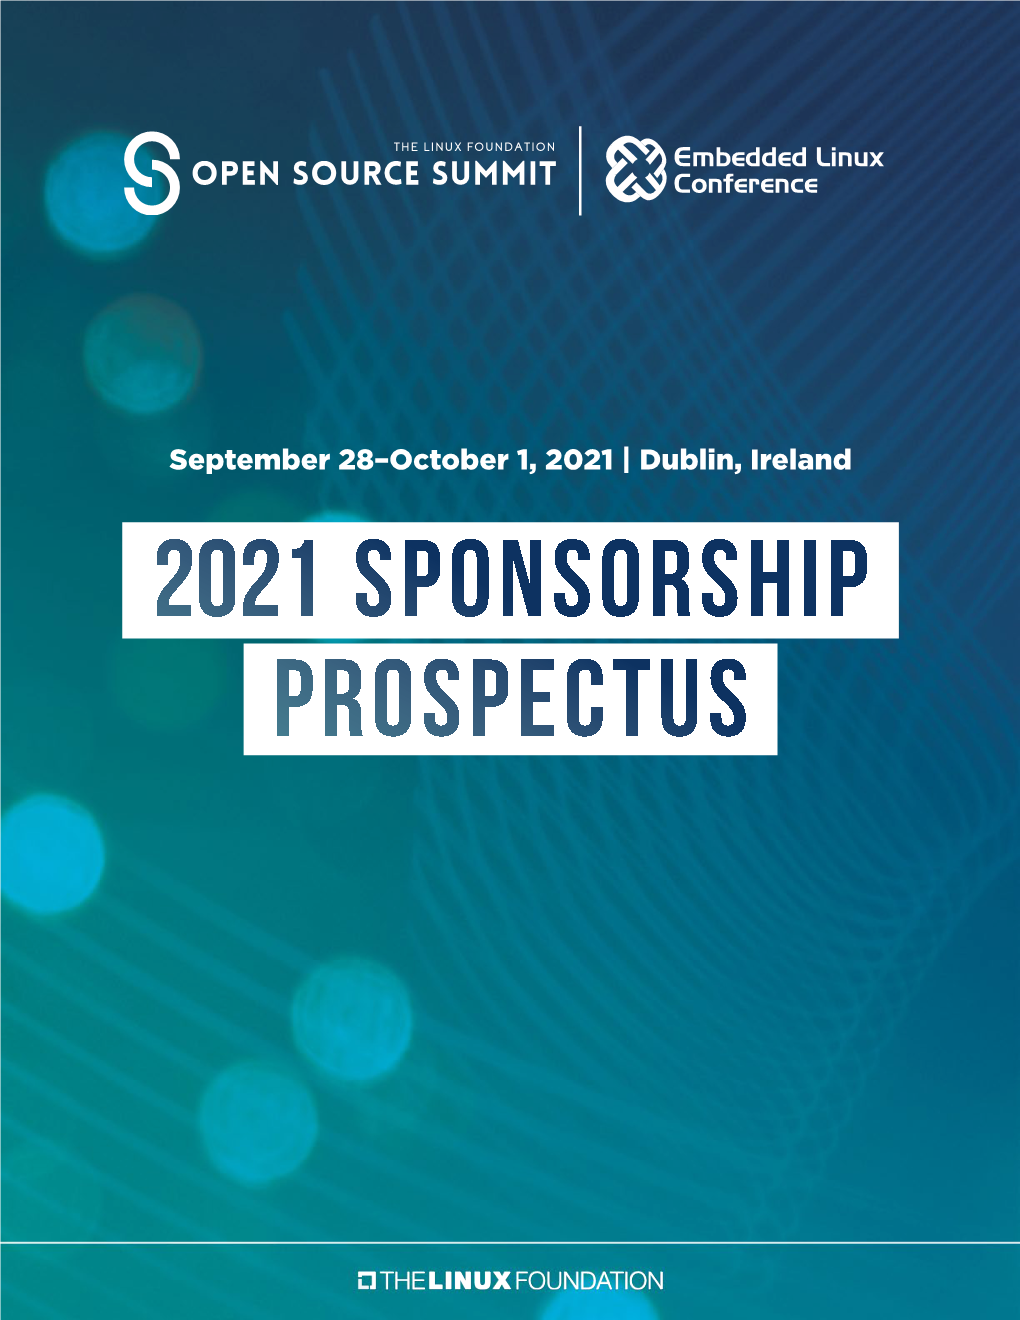 2021 Sponsorship Prospectus the Linux Foundation Open Source Summit 2021 Sponsorship Prospectus